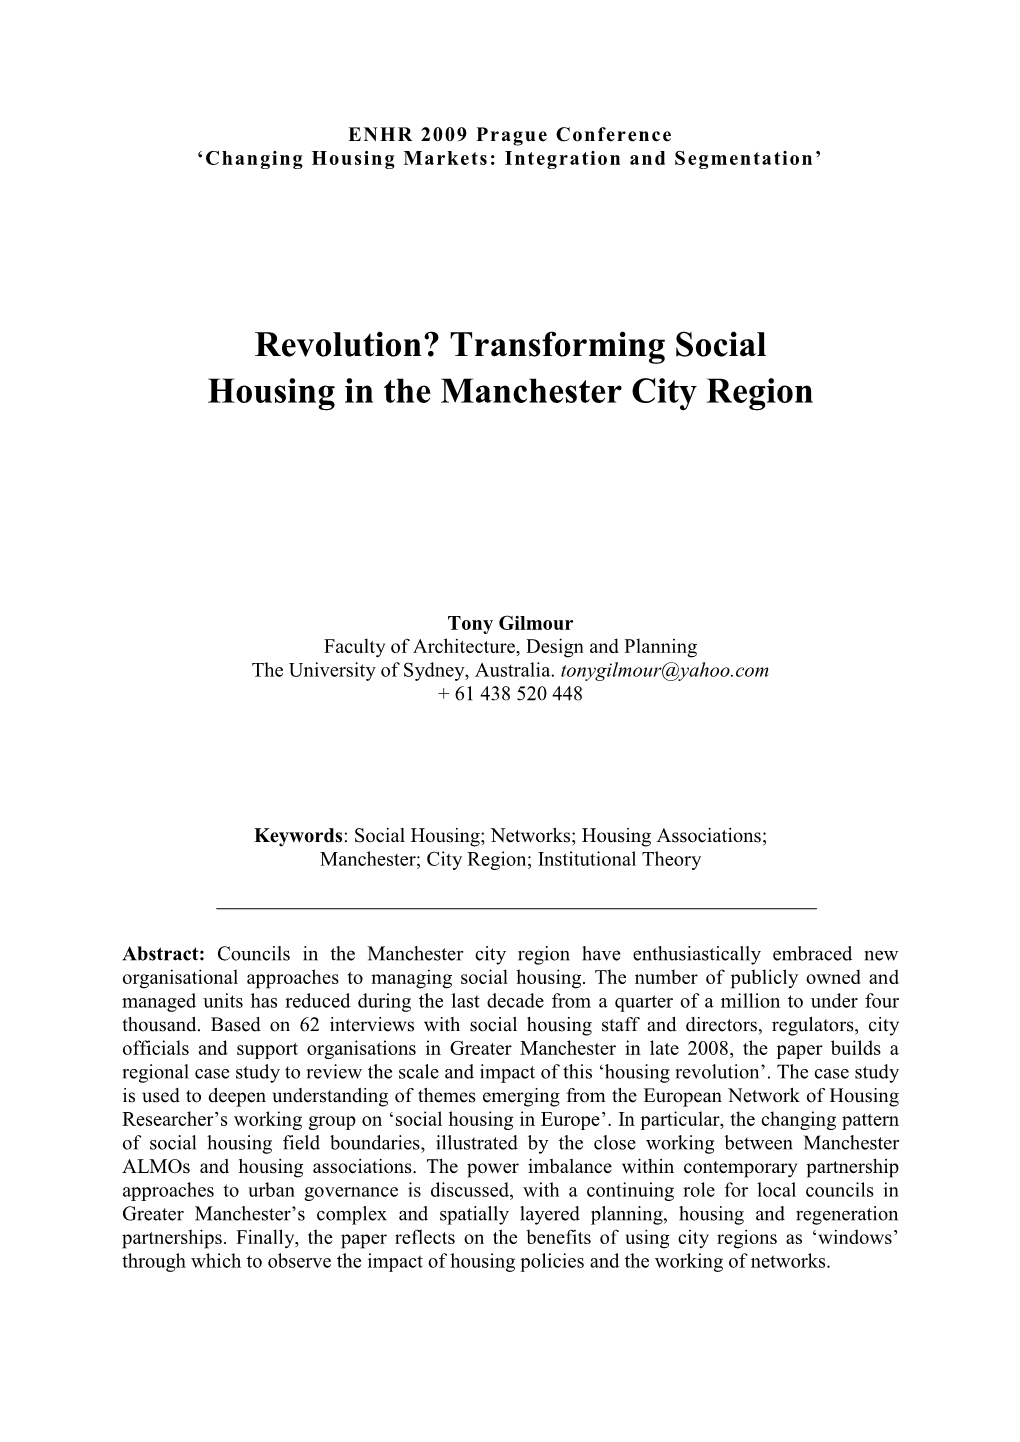 Revolution? Transforming Social Housing in the Manchester City Region